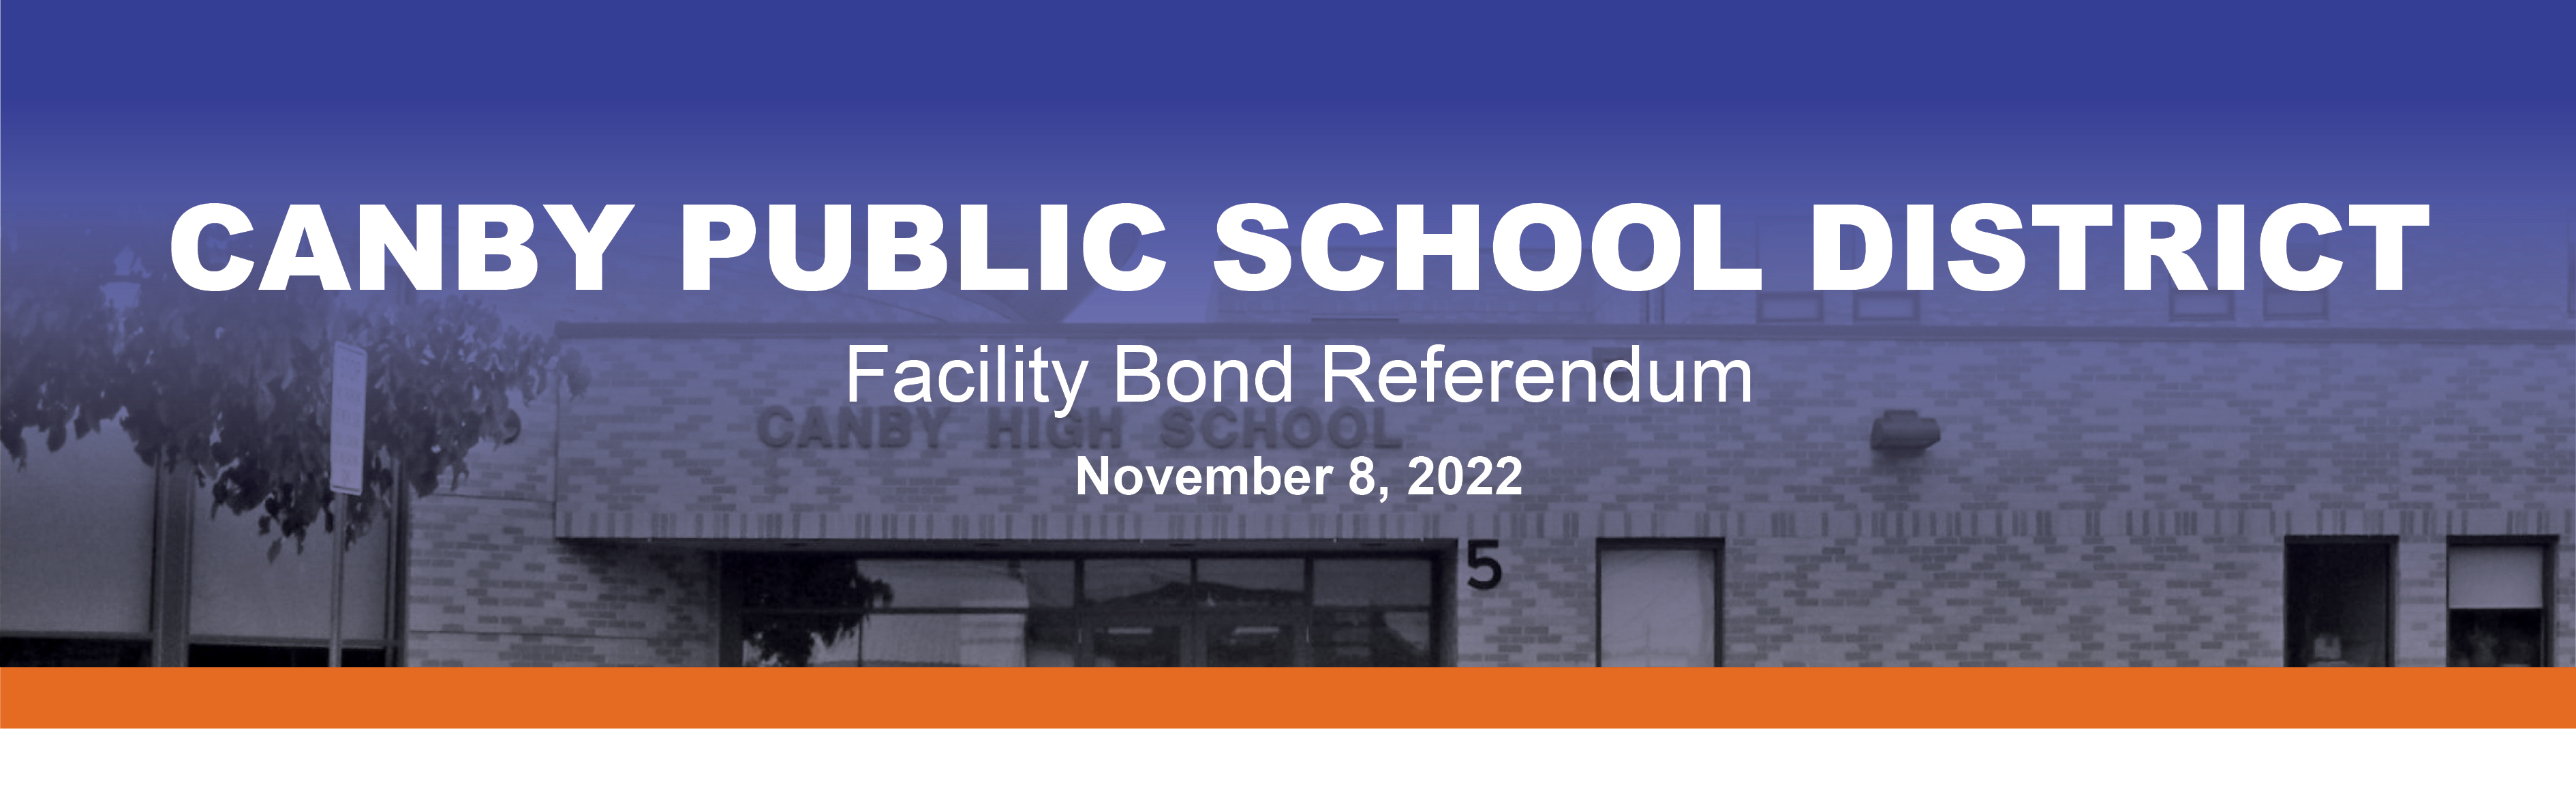 canby public school district facility bond referendum header image